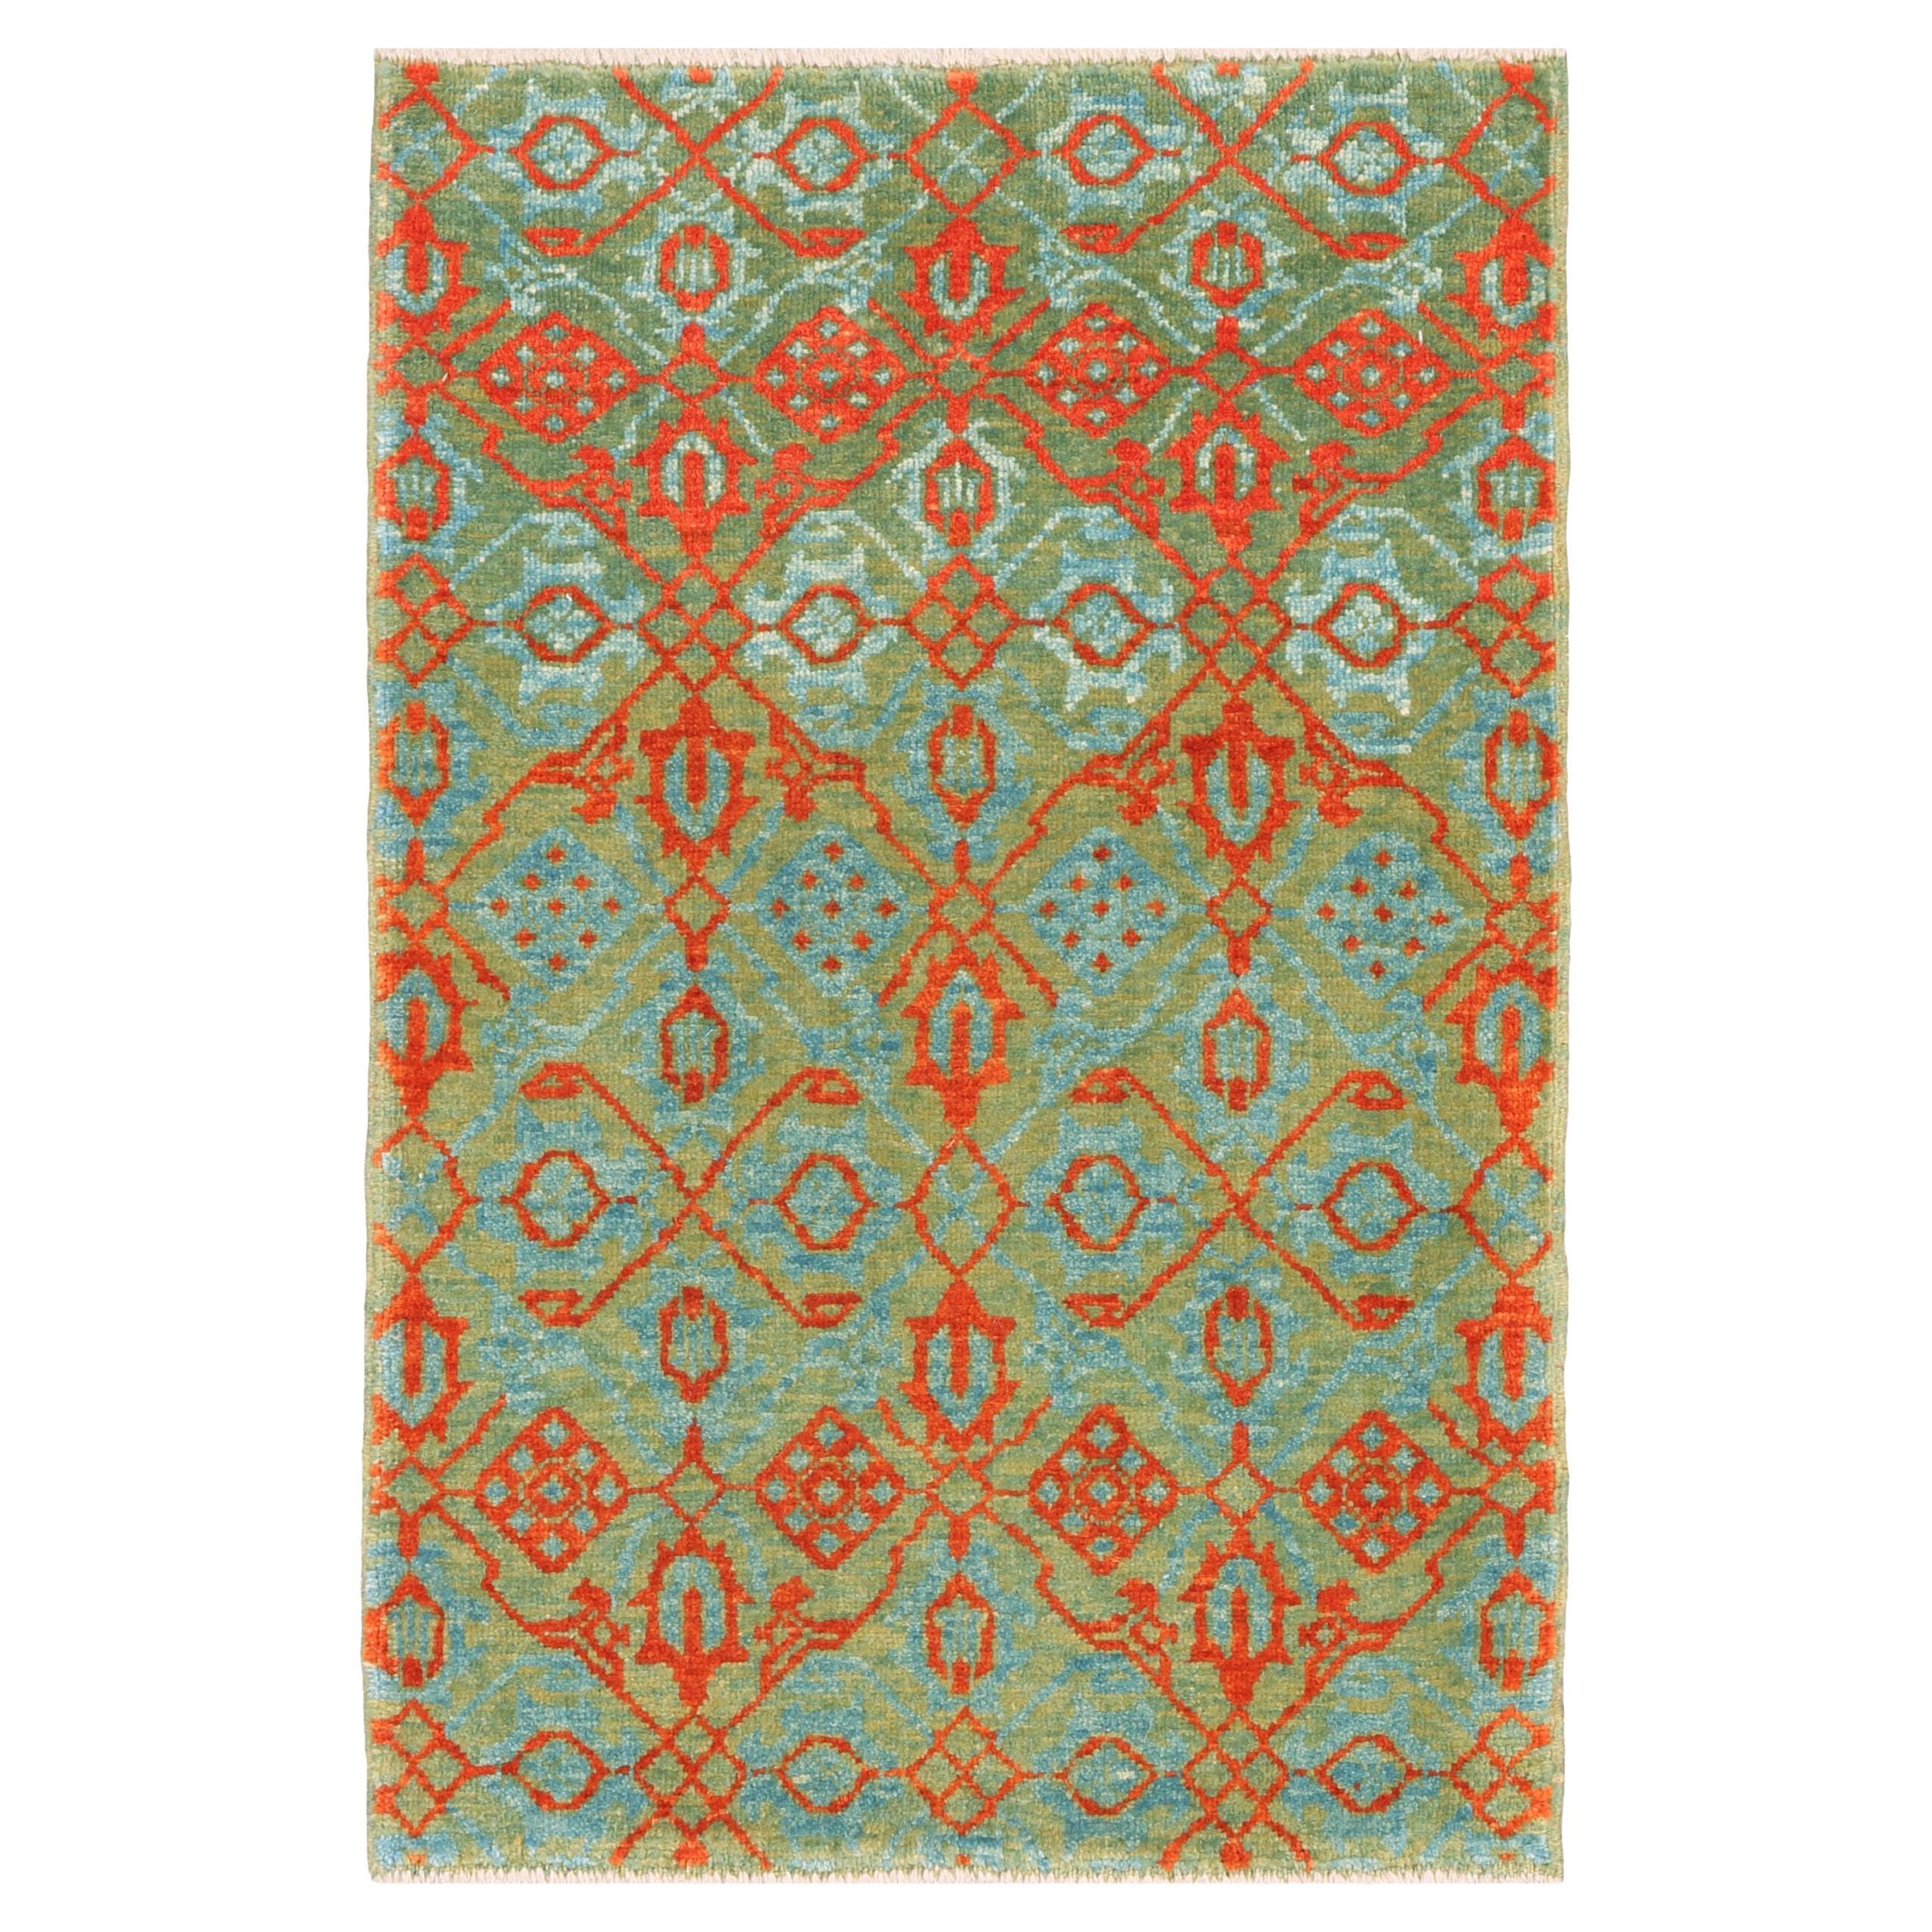 Ararat Rugs Mamluk Wagireh Rug Lattice Pattern Revival Carpet Natural Dyed For Sale